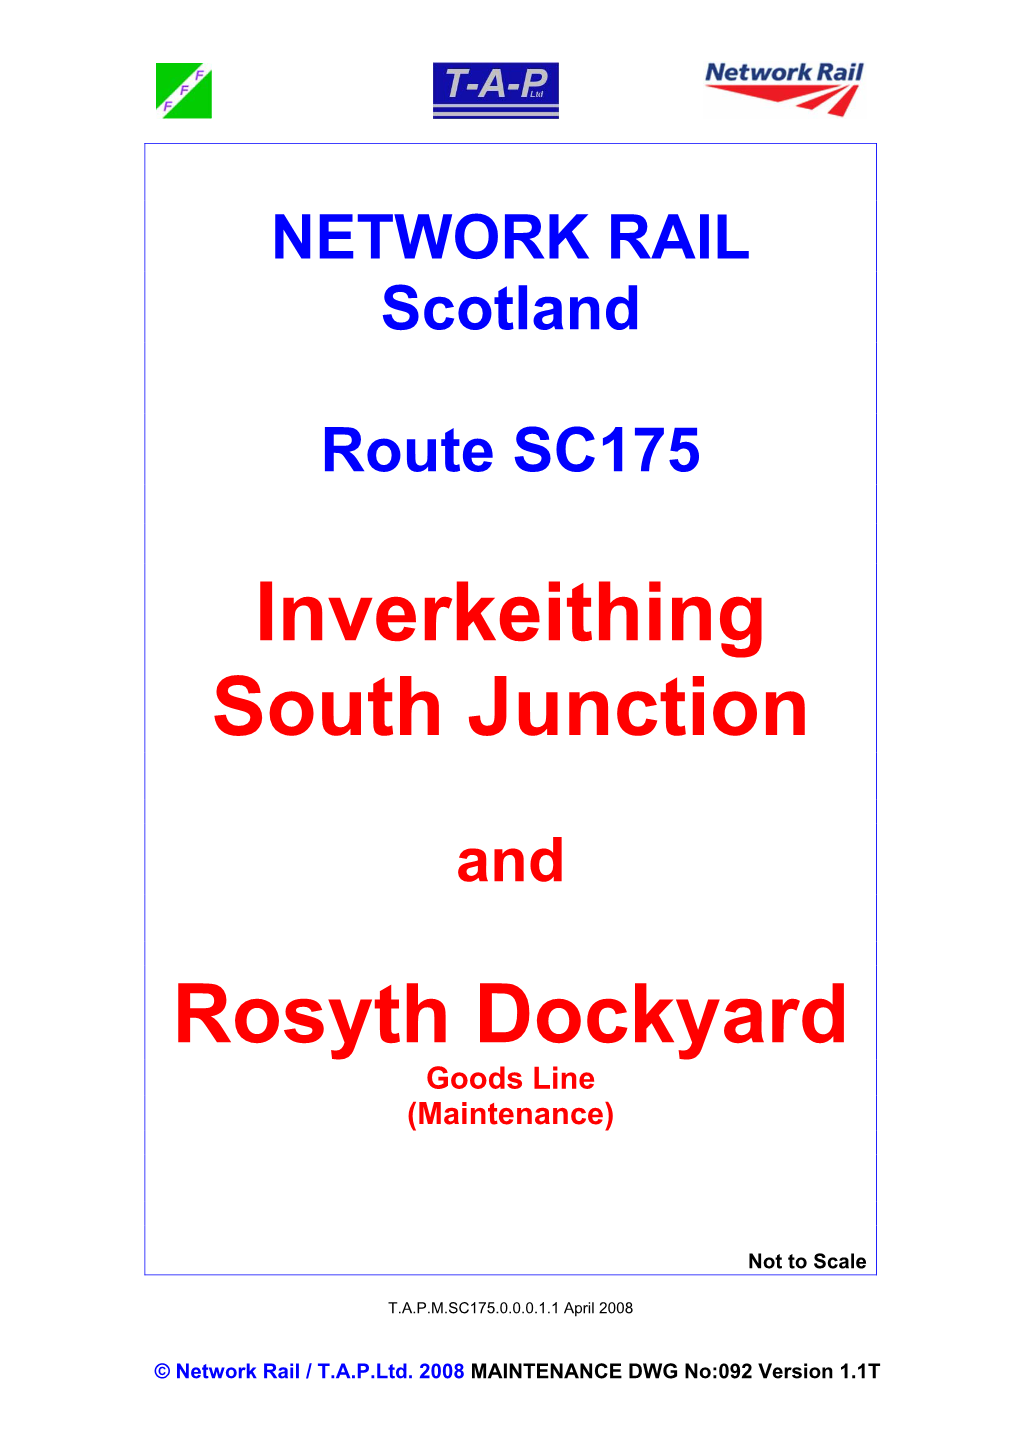 Inverkeithing South Junction Rosyth Dockyard